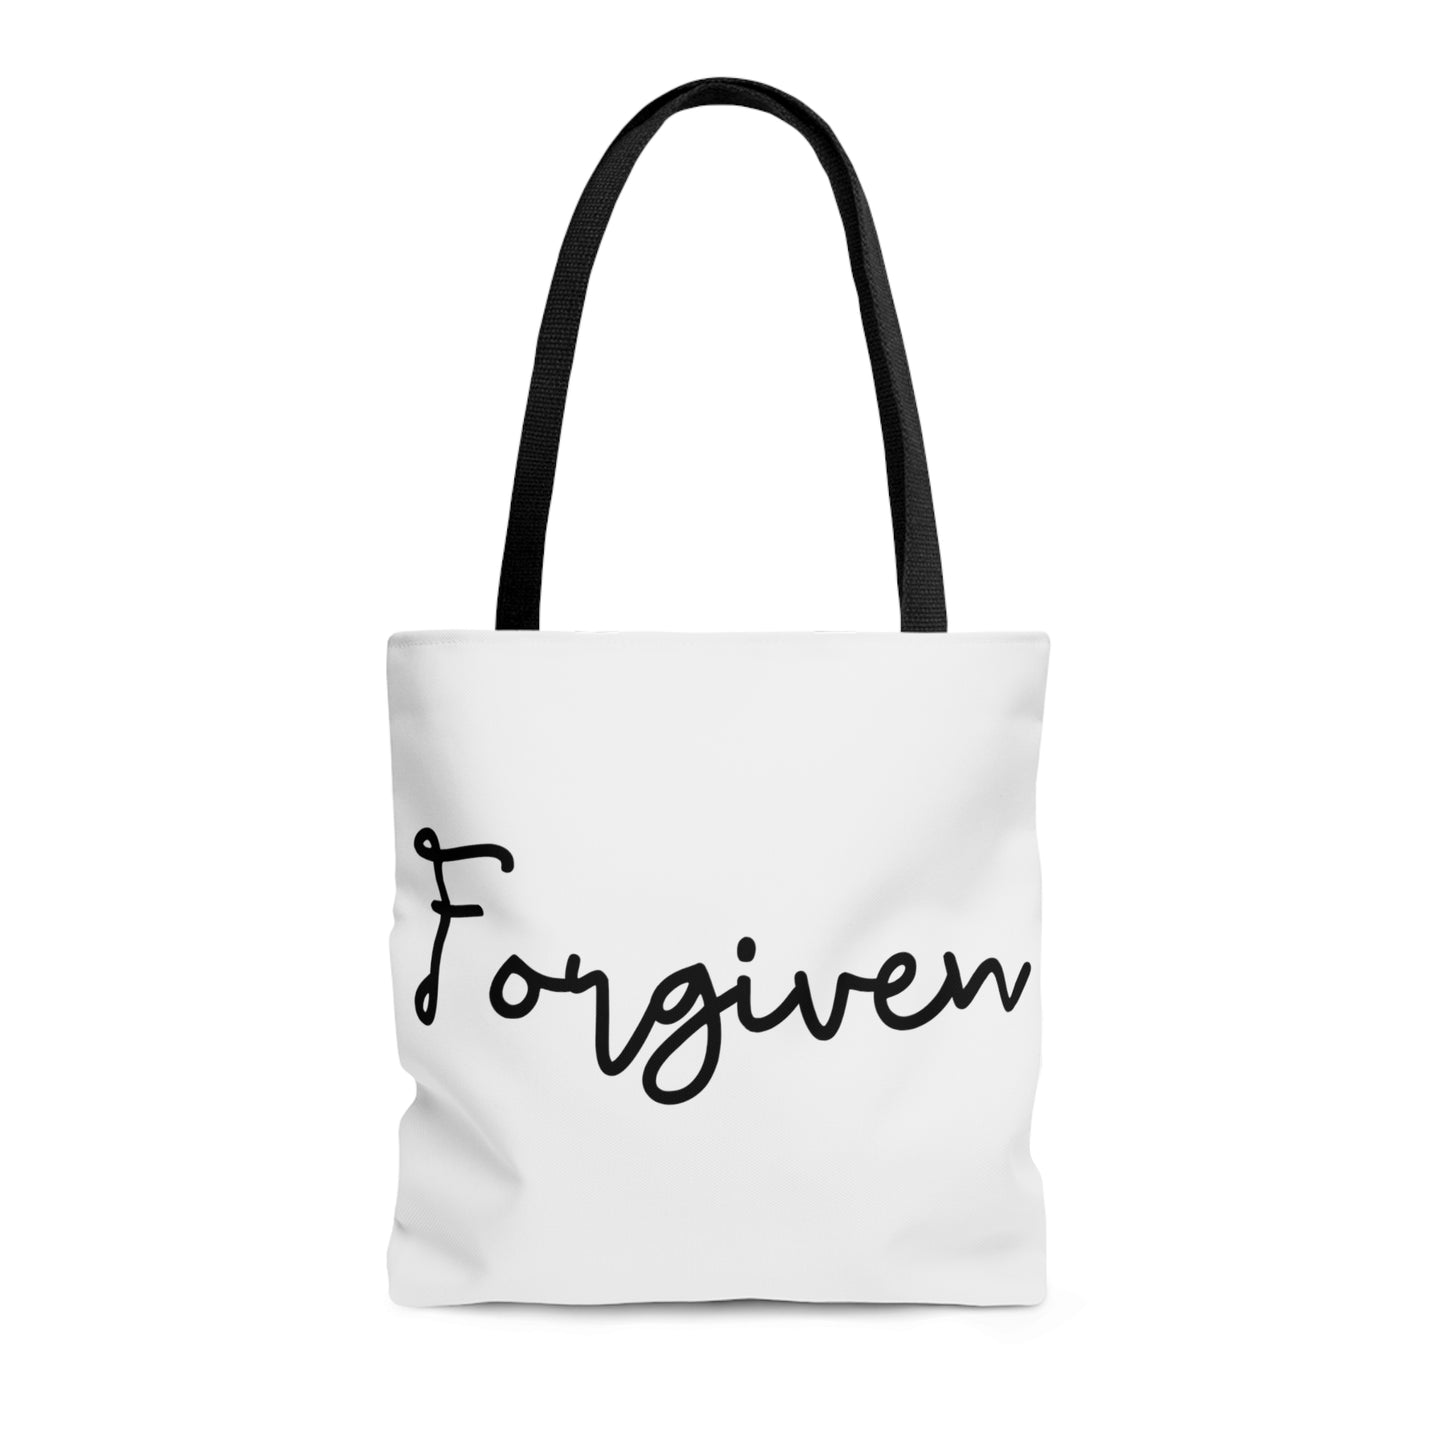 Forgiven Tote Bag